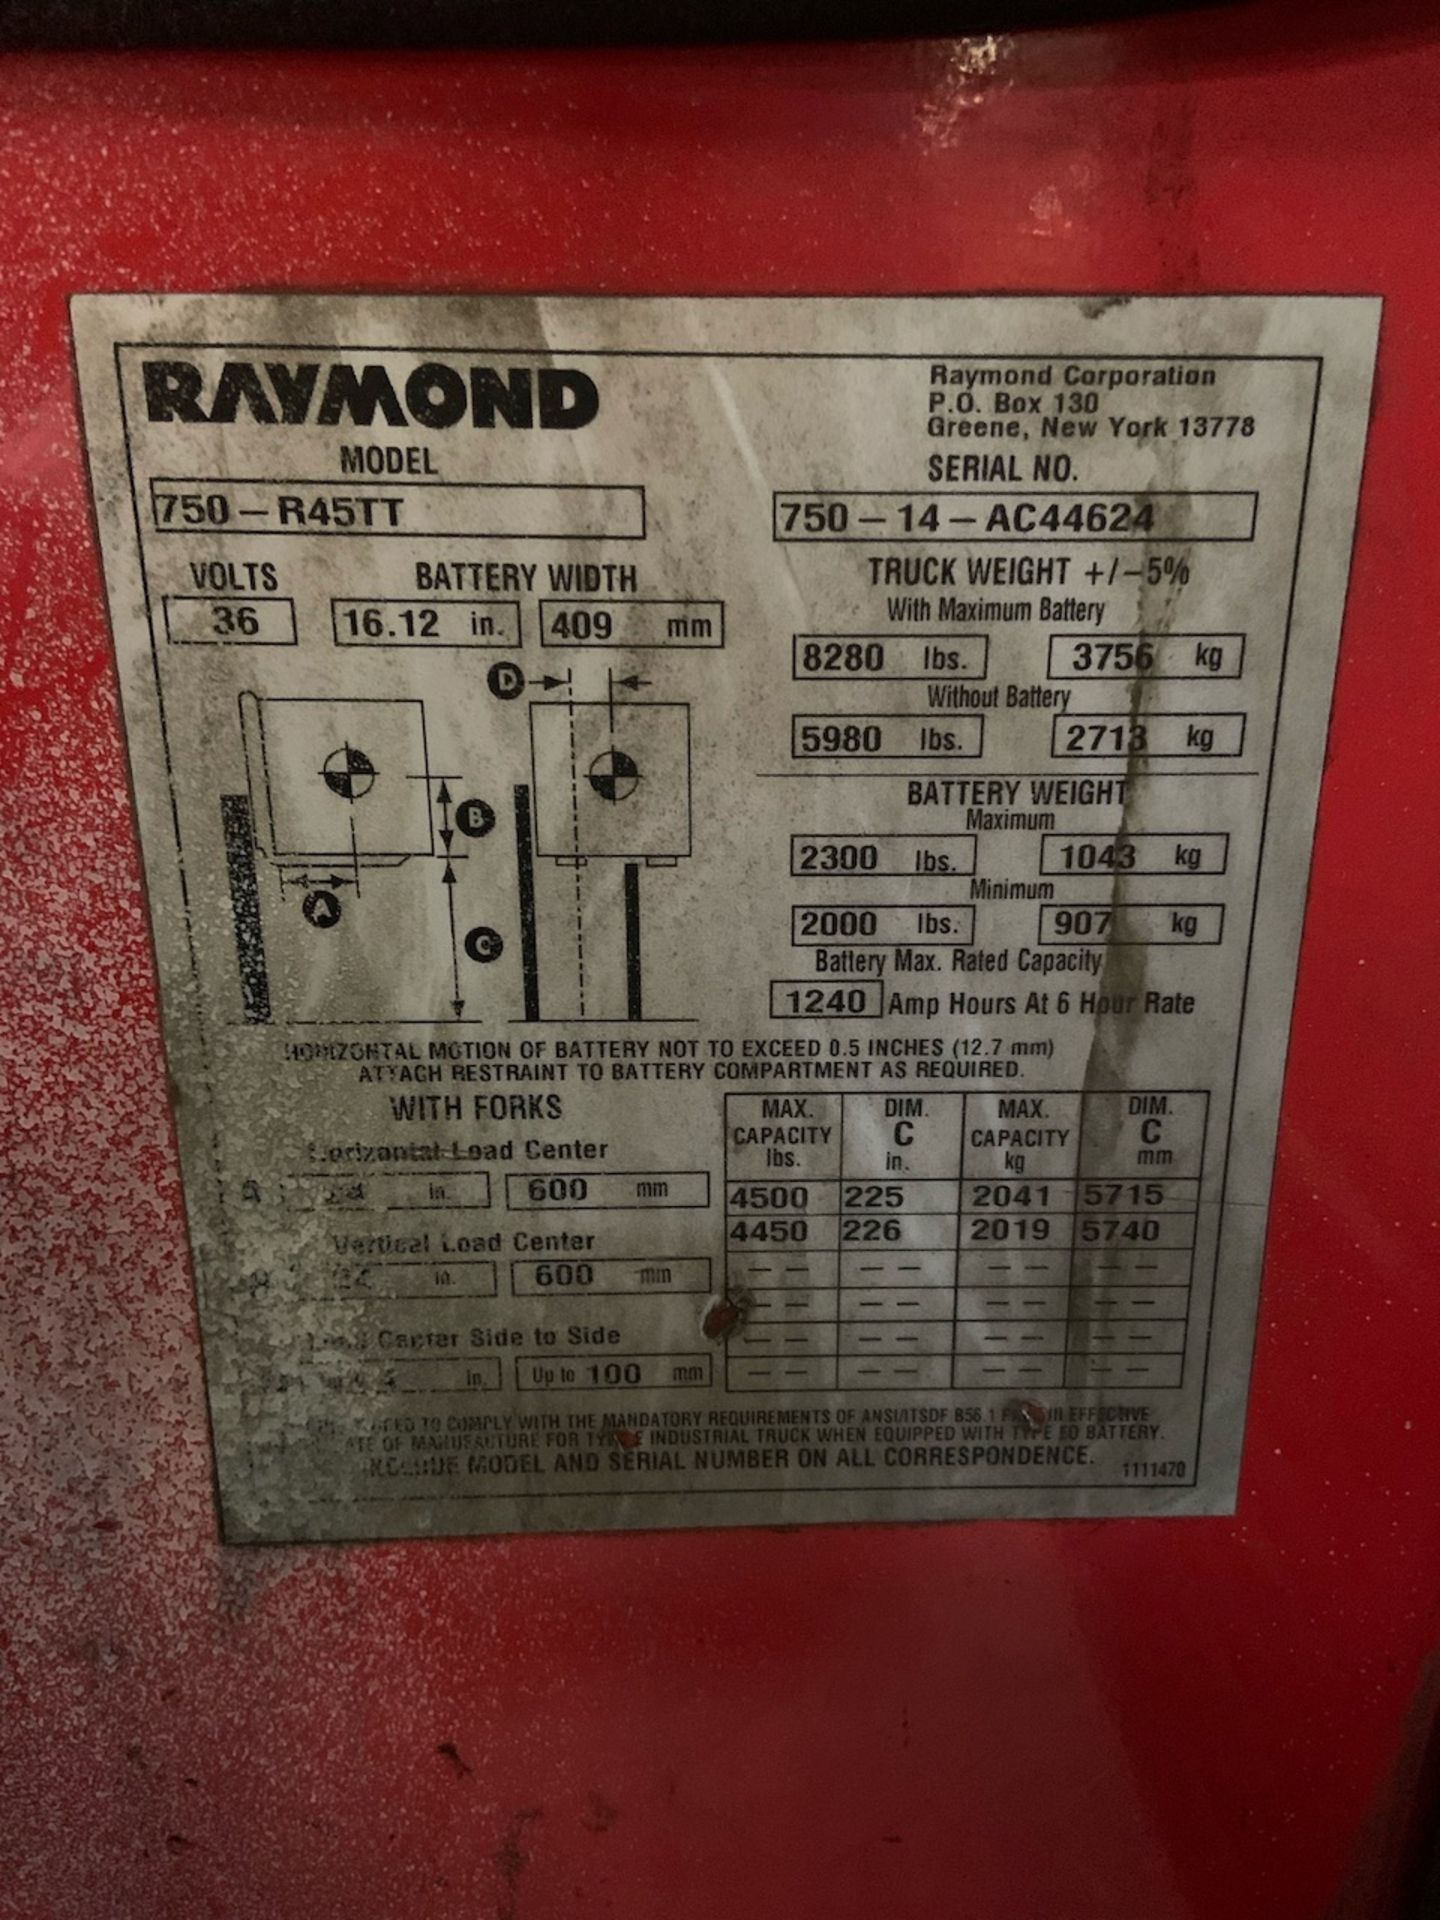 Raymond Reach truck model: 750-R45TT Serial: 750-14-AC44624 Year: 2014 Hours: 18712 - Image 5 of 6